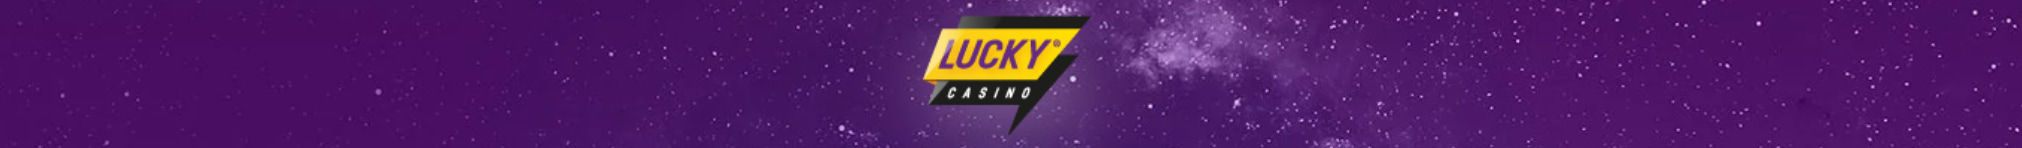 lucky casino banner